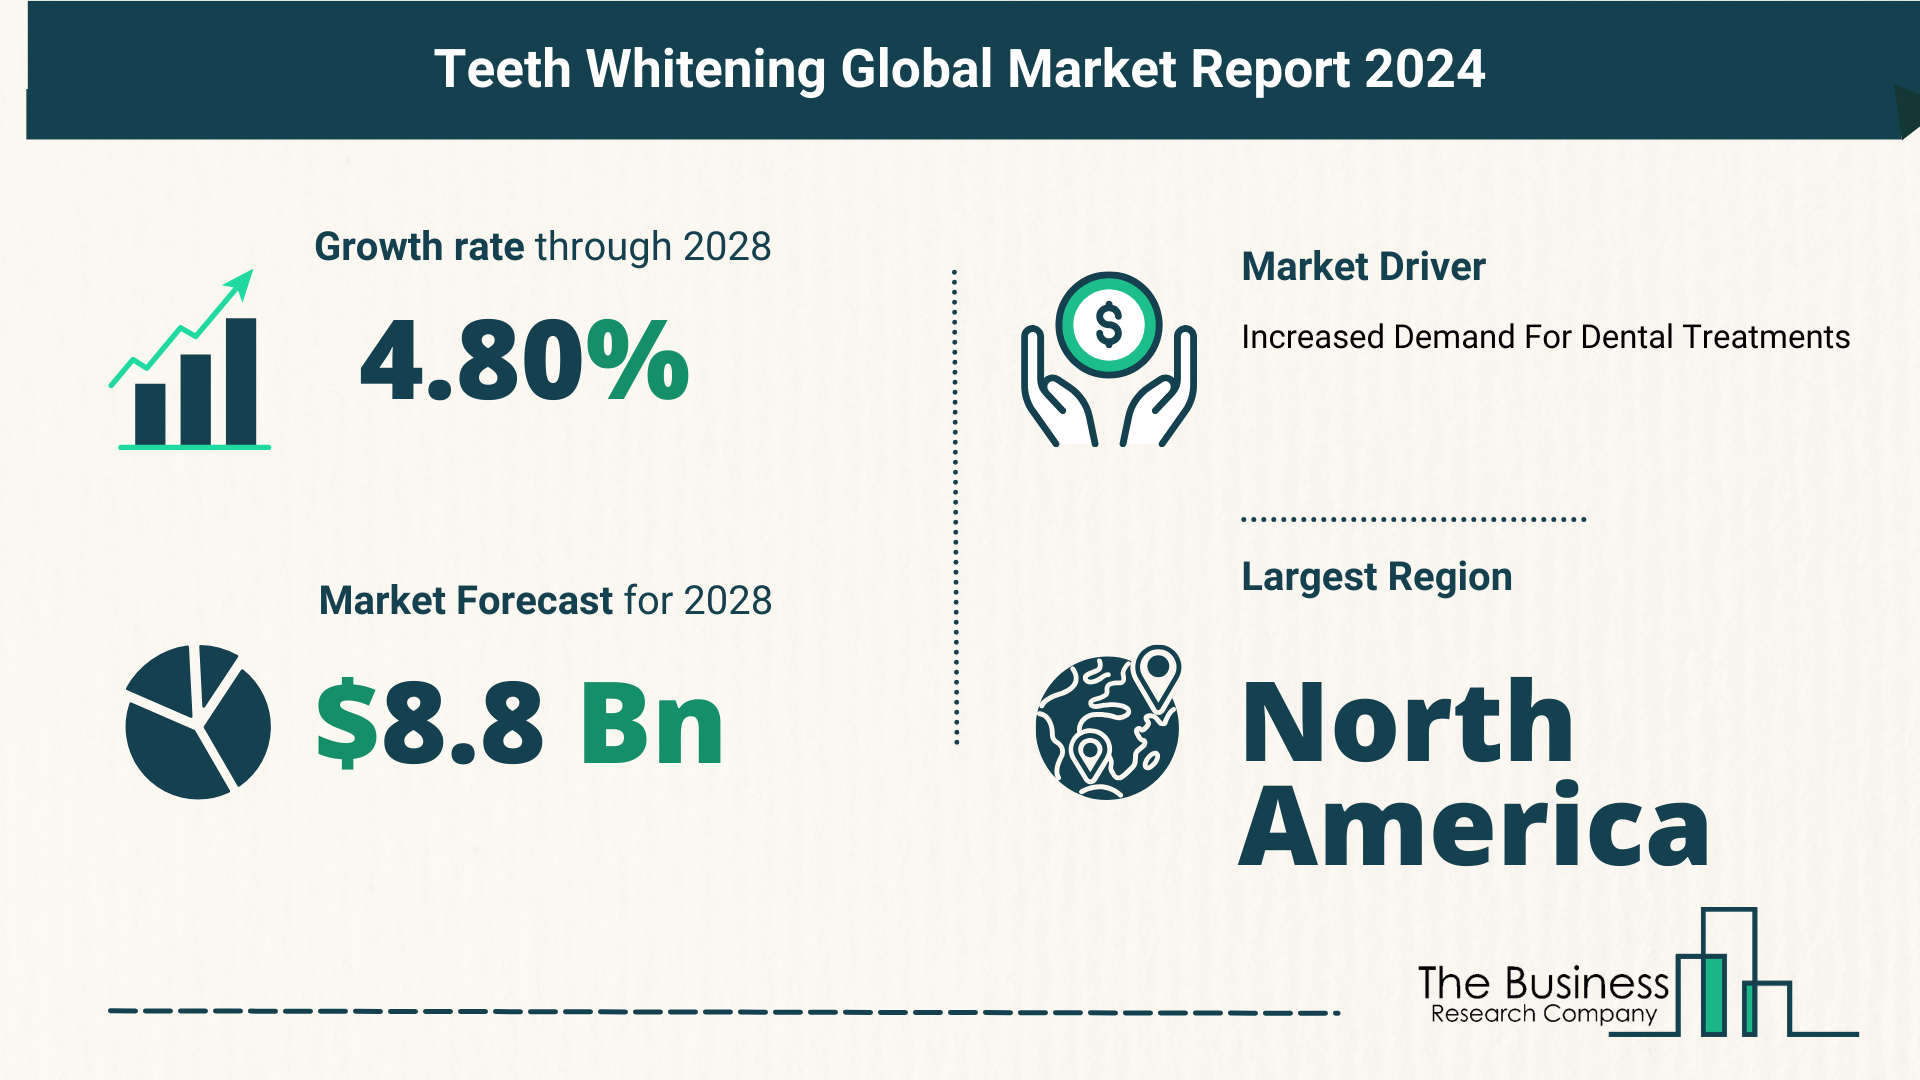 Global Teeth Whitening Market